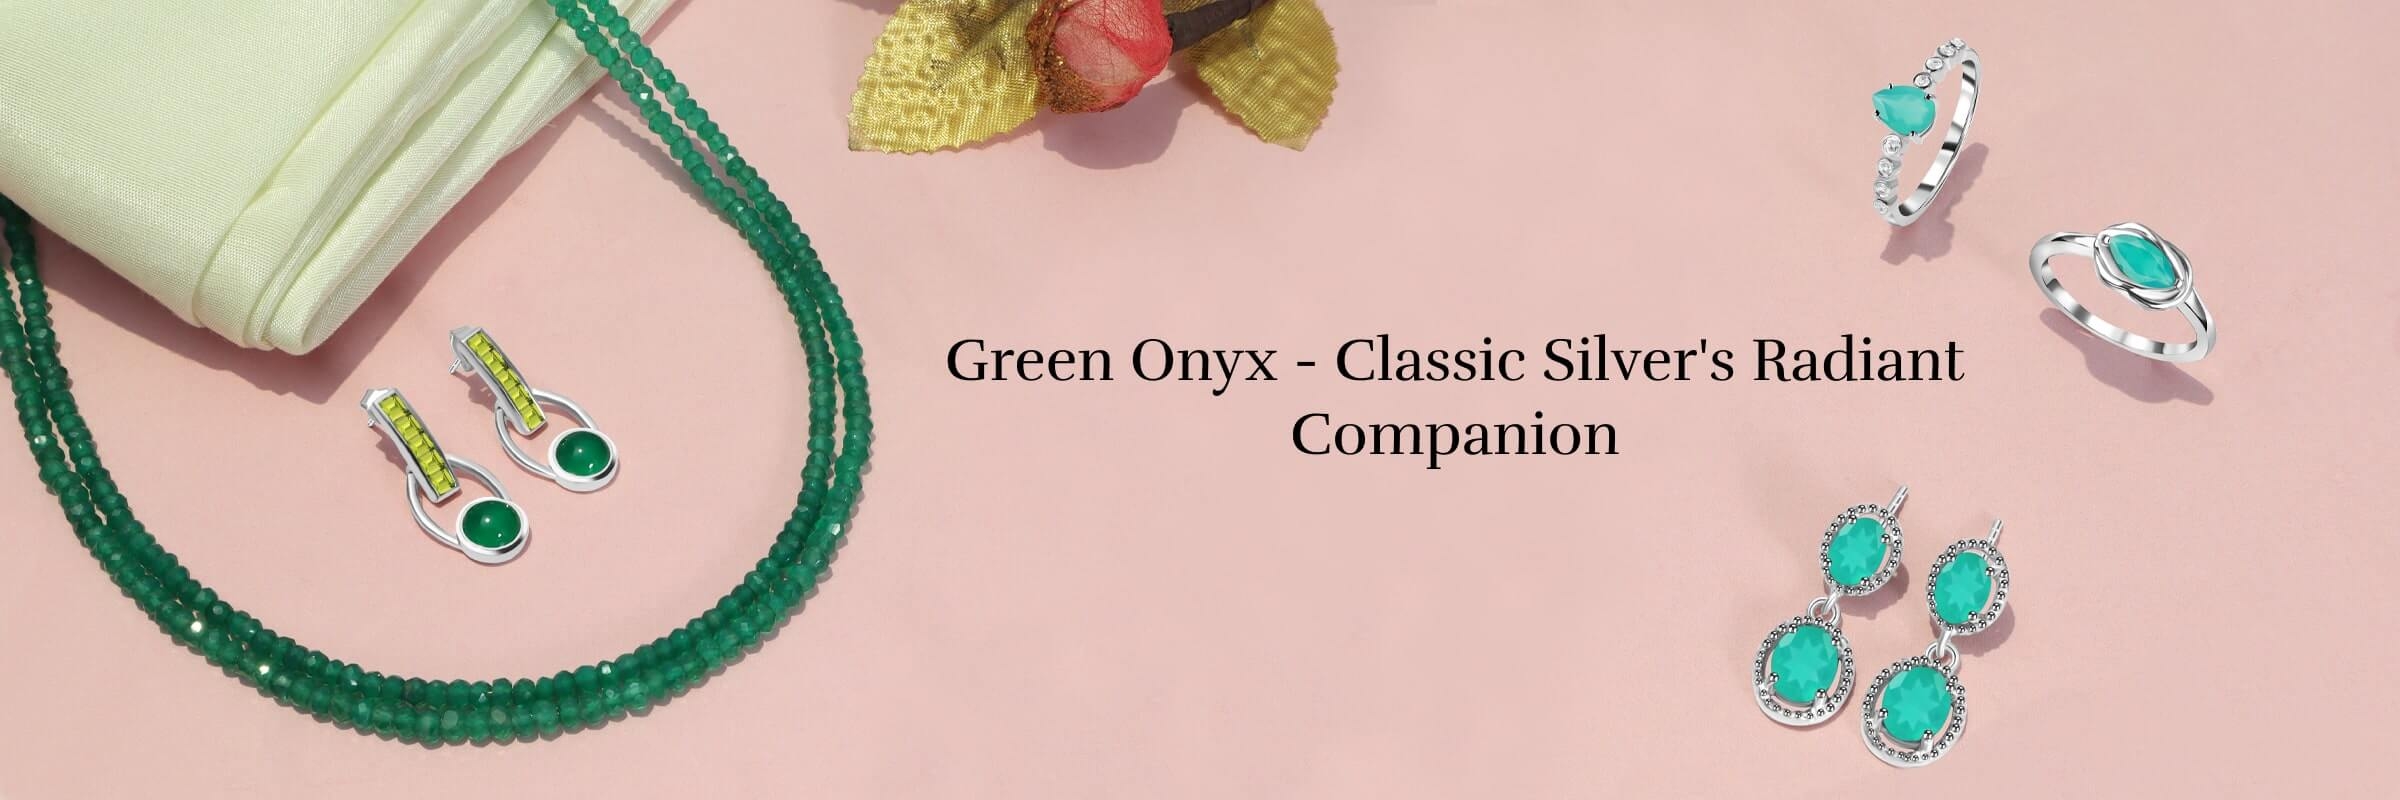 Silver Green Onyx Jewelry